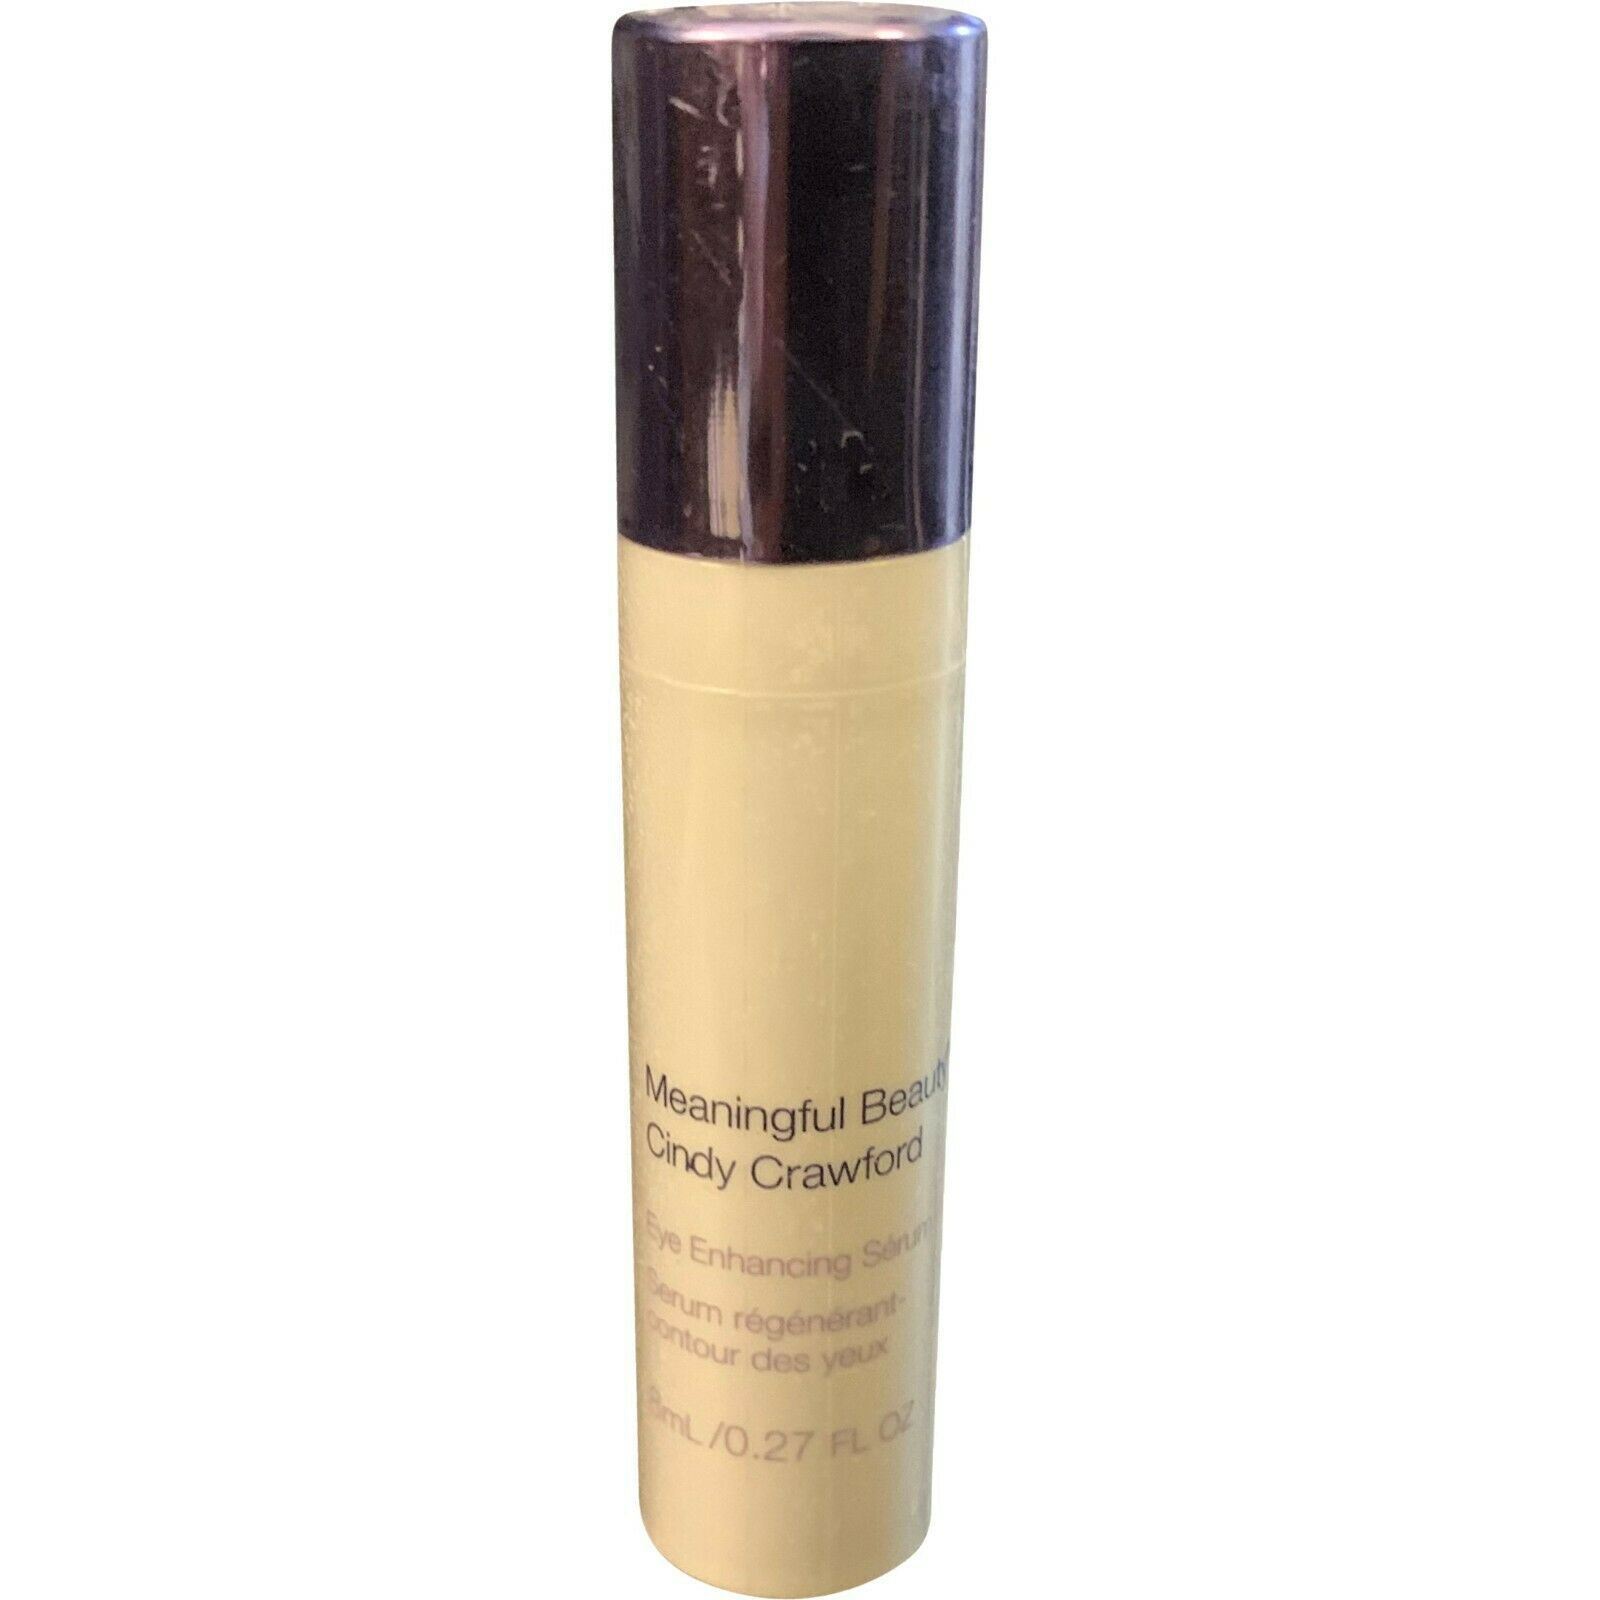 Meaningful Beauty Cindy Crawford Eye Enhancing Serum .27 OZ New Sealed-EYE SERUM - $14.99